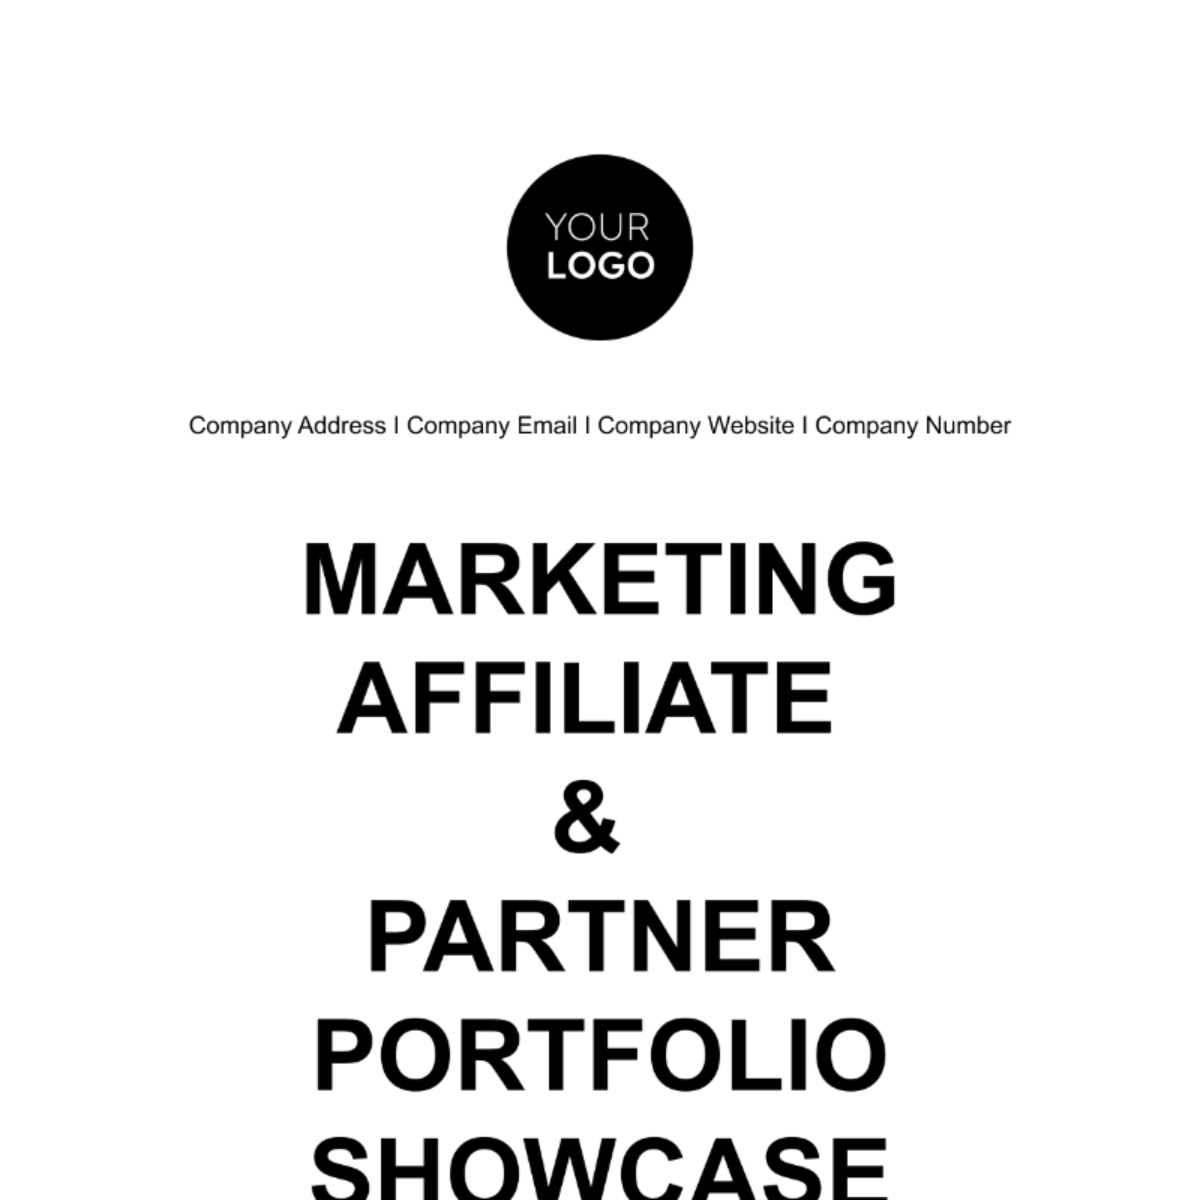 Marketing Affiliate & Partner Portfolio Showcase Template